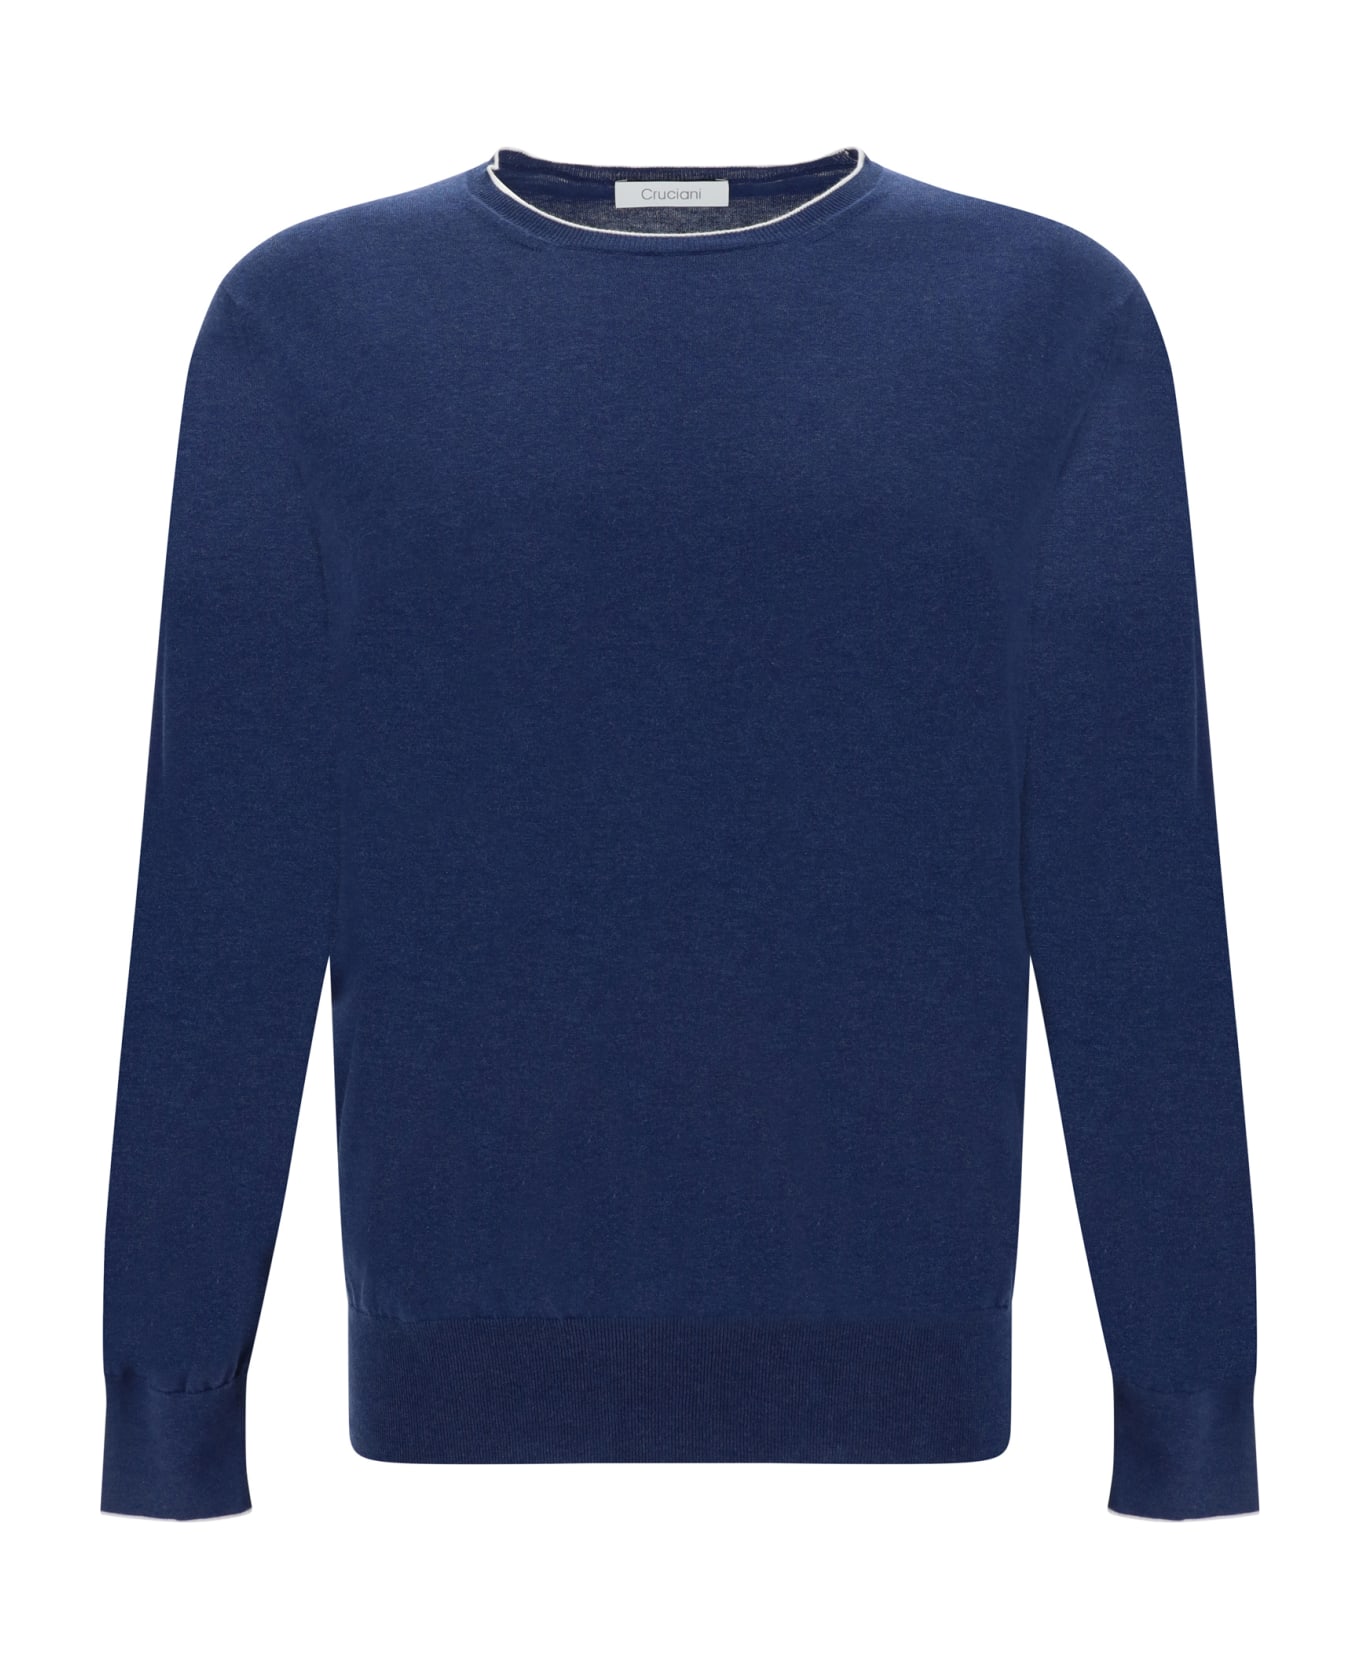 Cruciani Sweater - 41e80014 フリース